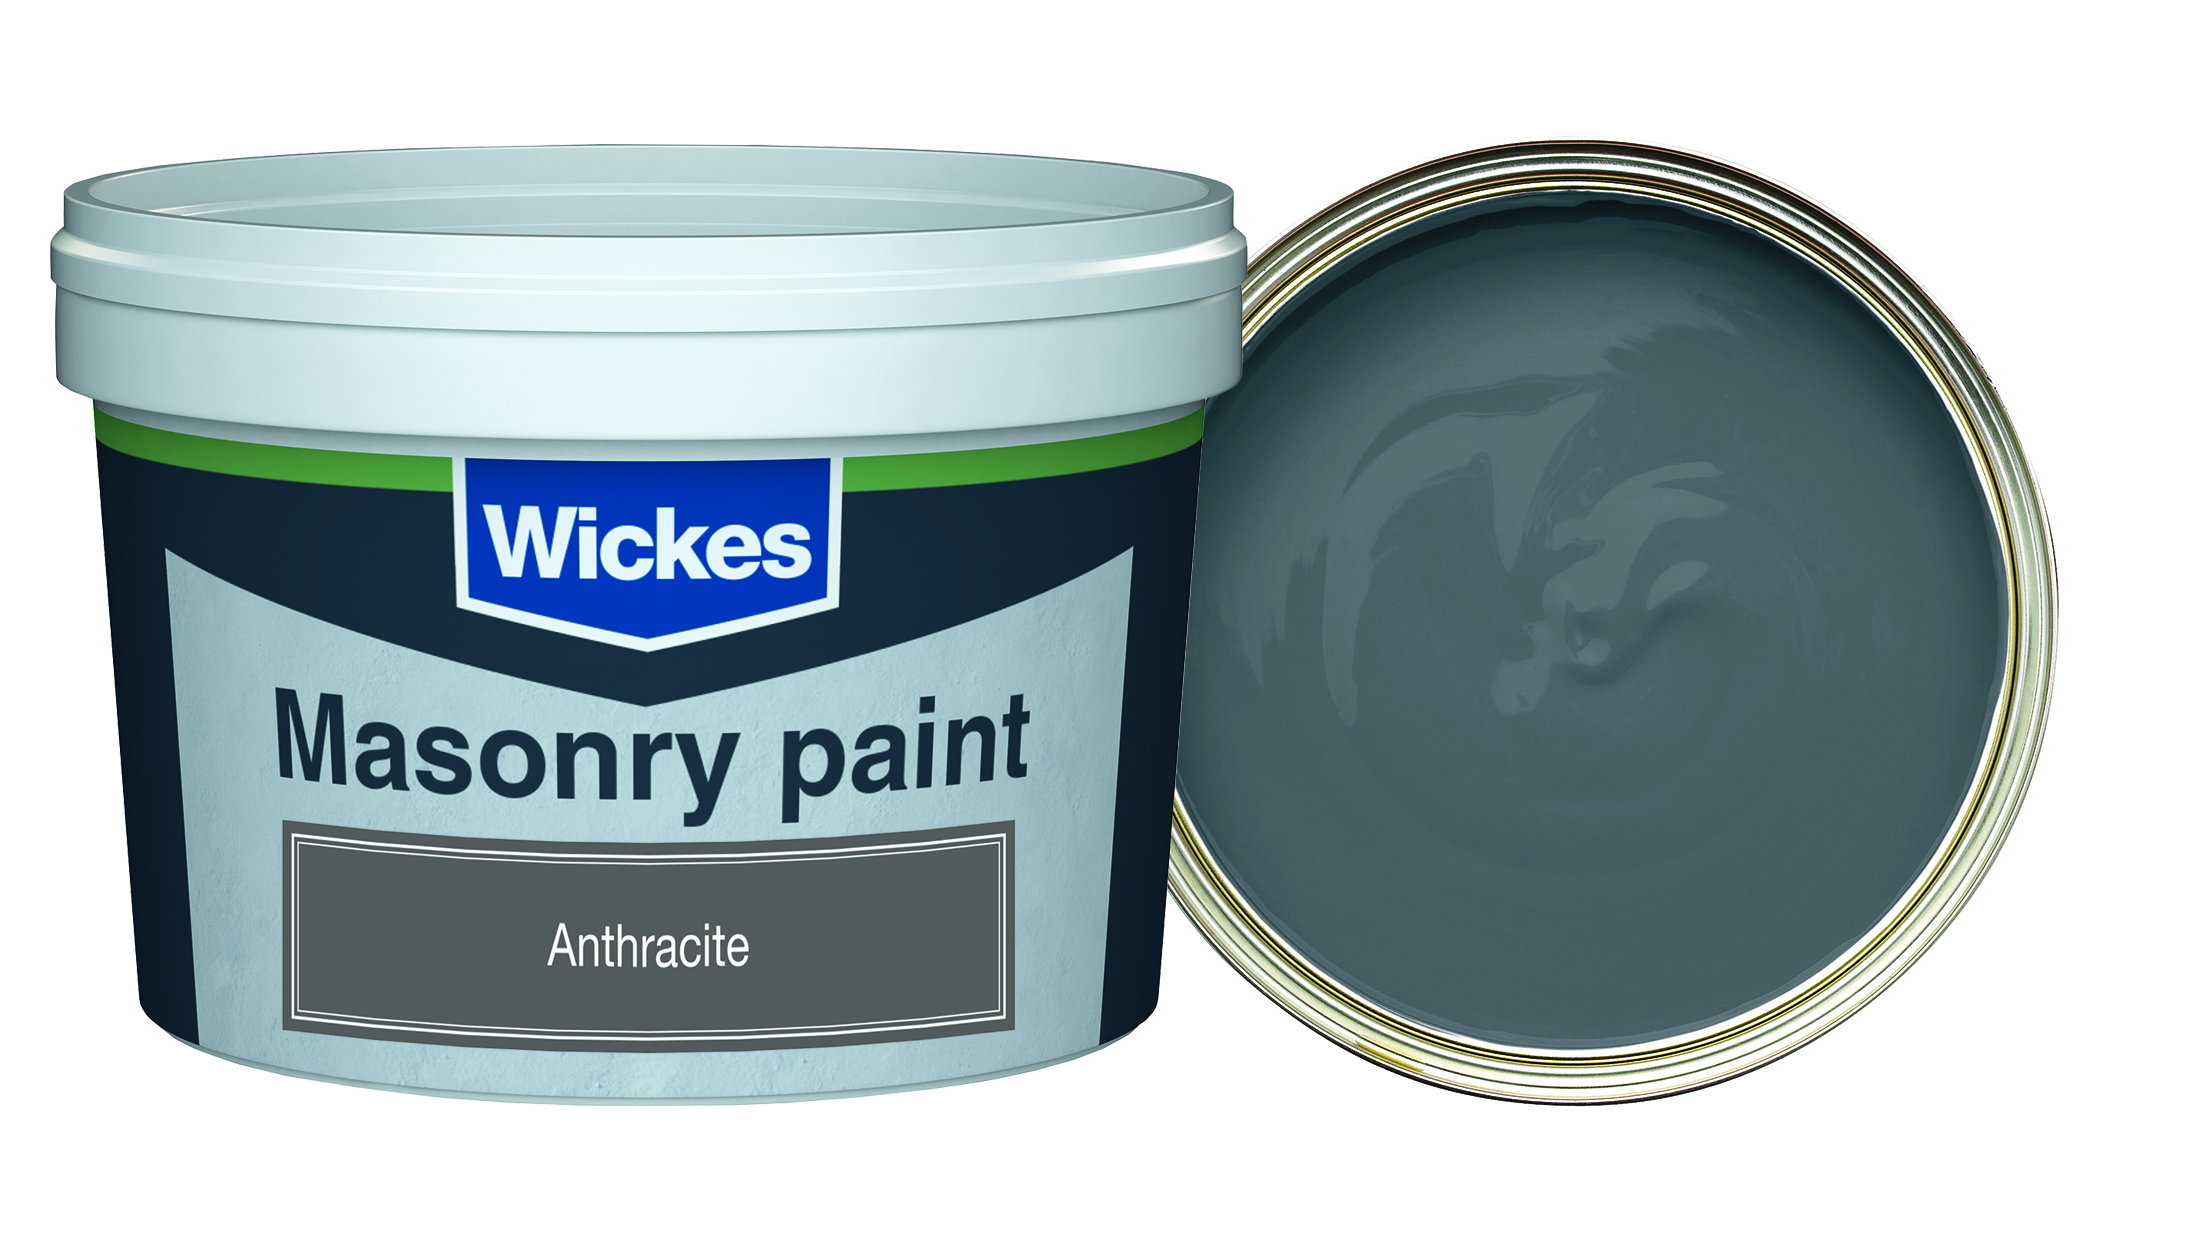 Wickes Smooth Masonry Paint - Anthracite Grey - 250ml